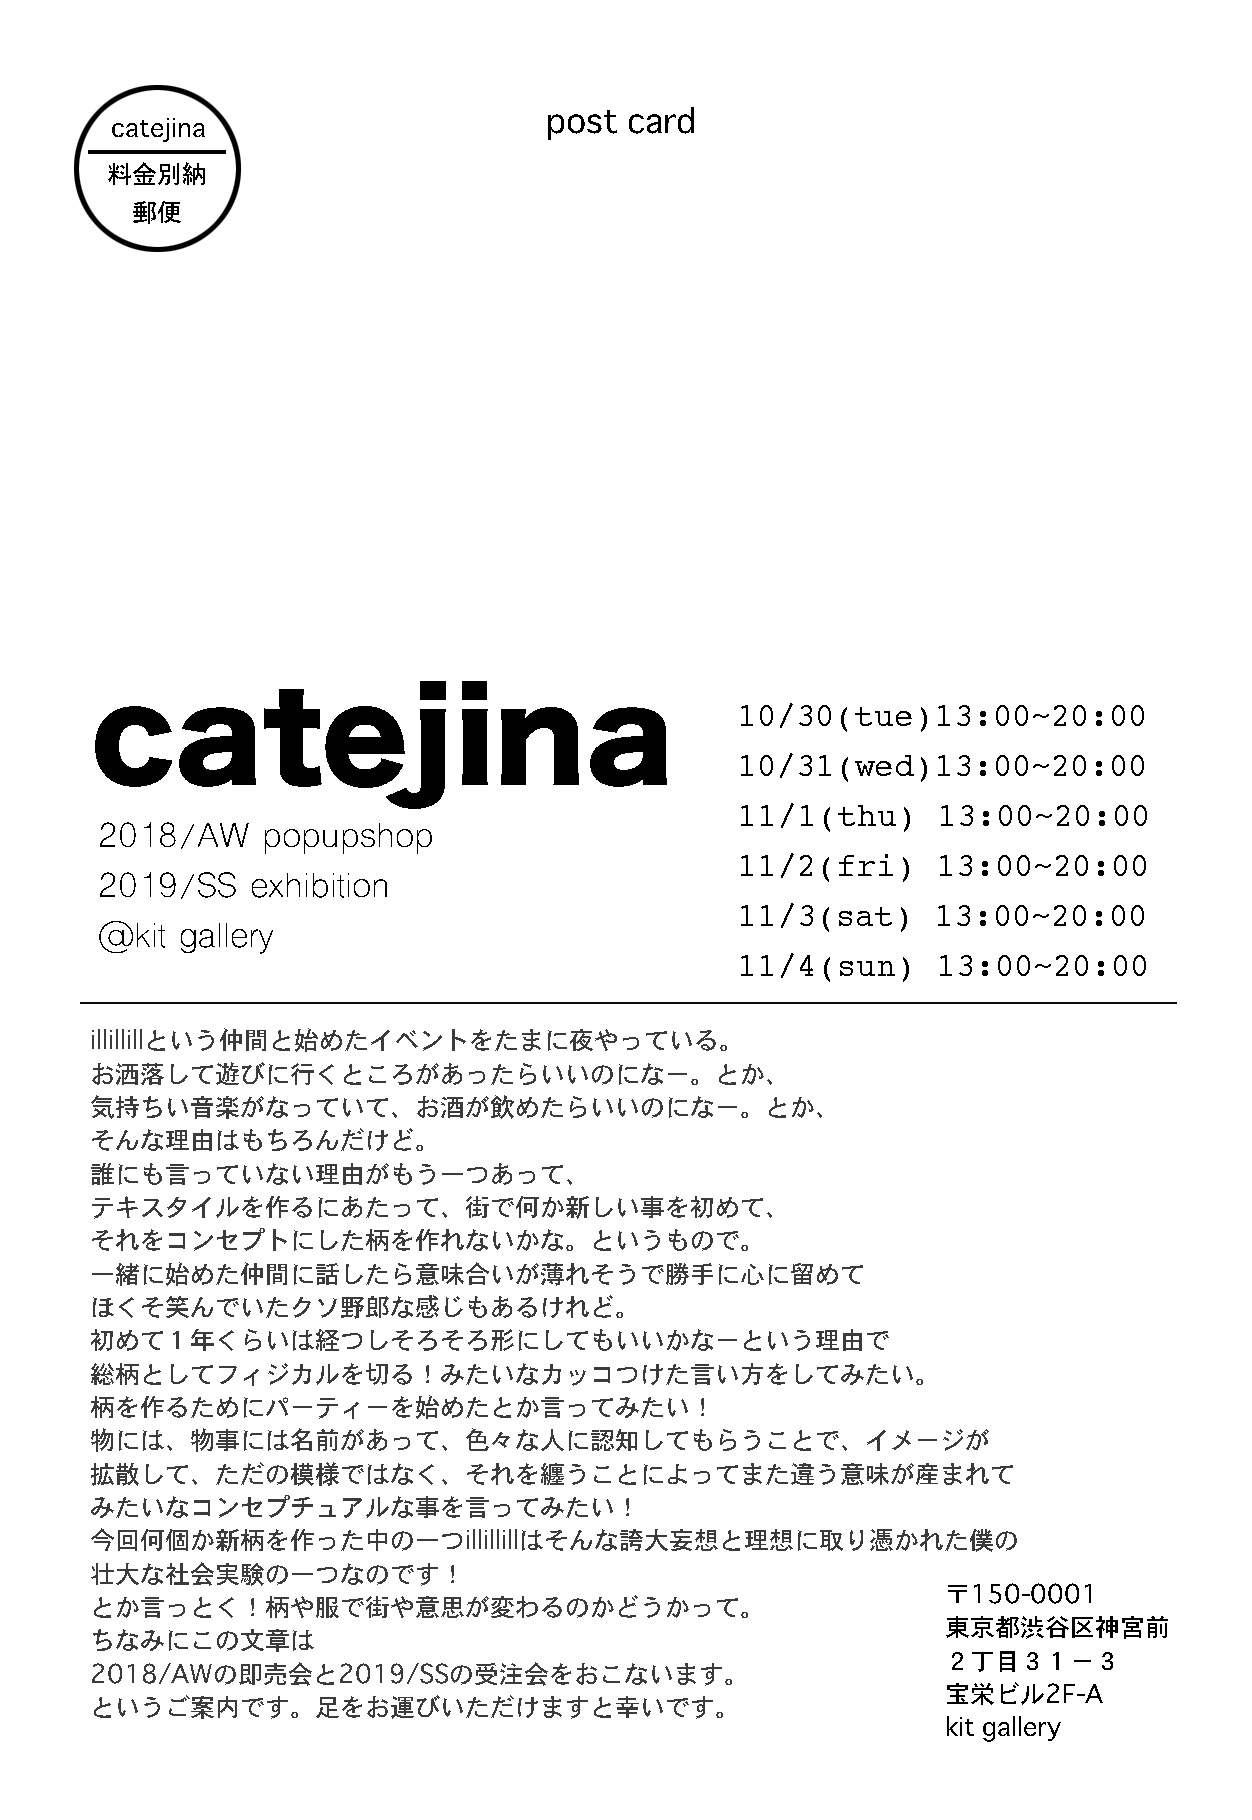 http://kit-gallery.com/schedule/files/_catejina-kit---201810-ura.jpg